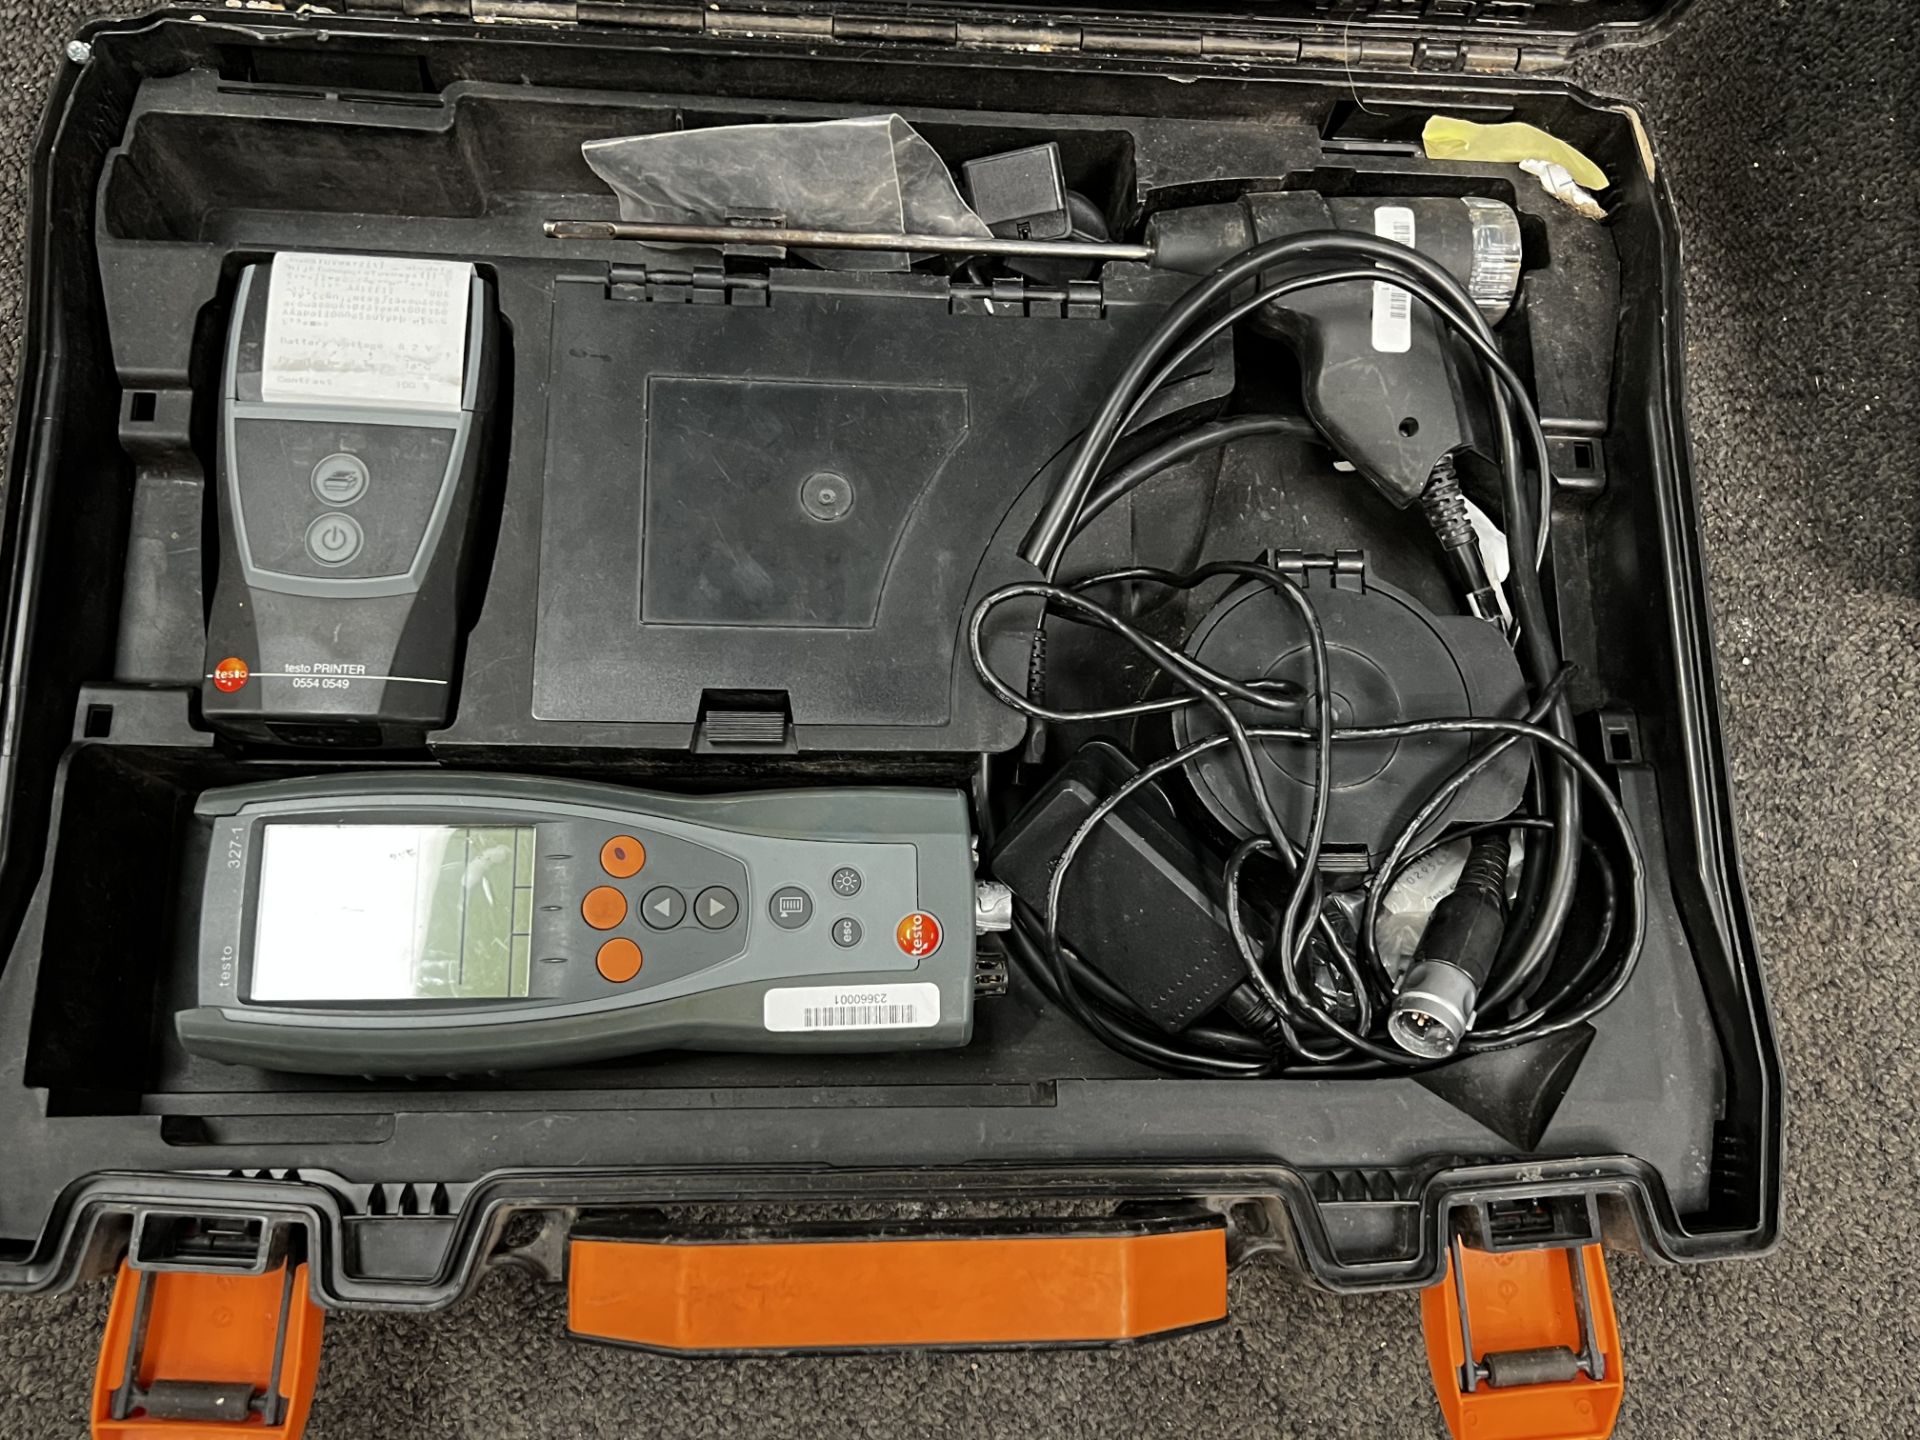 Testo 327-1 Gas Analyser Kit